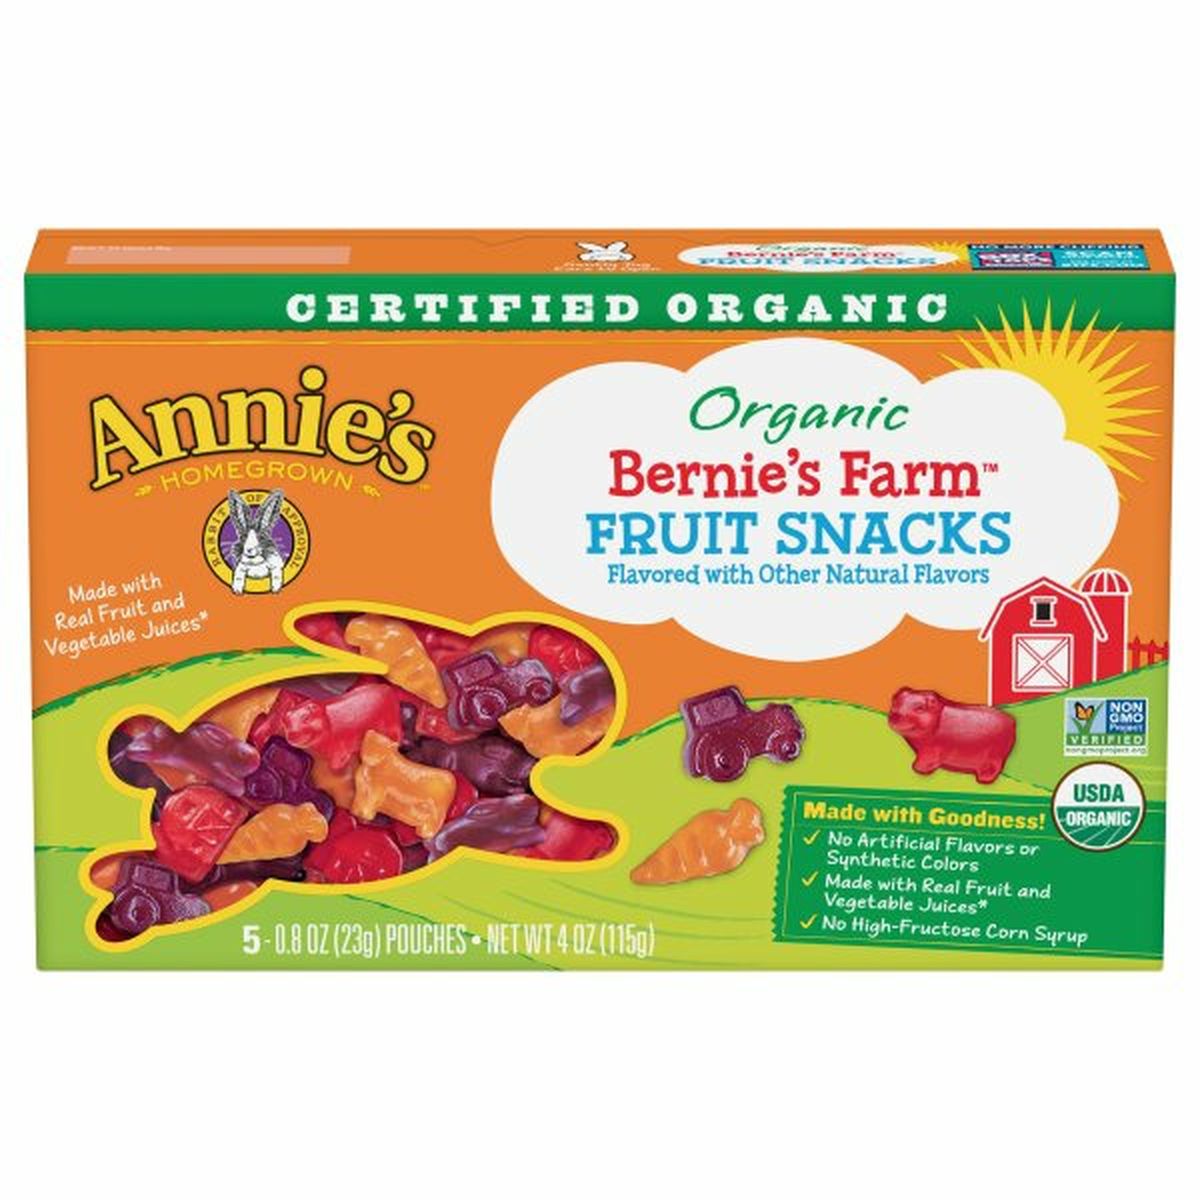 Calories in Annie's Fruit Snacks, Organic, Bernie's Farm